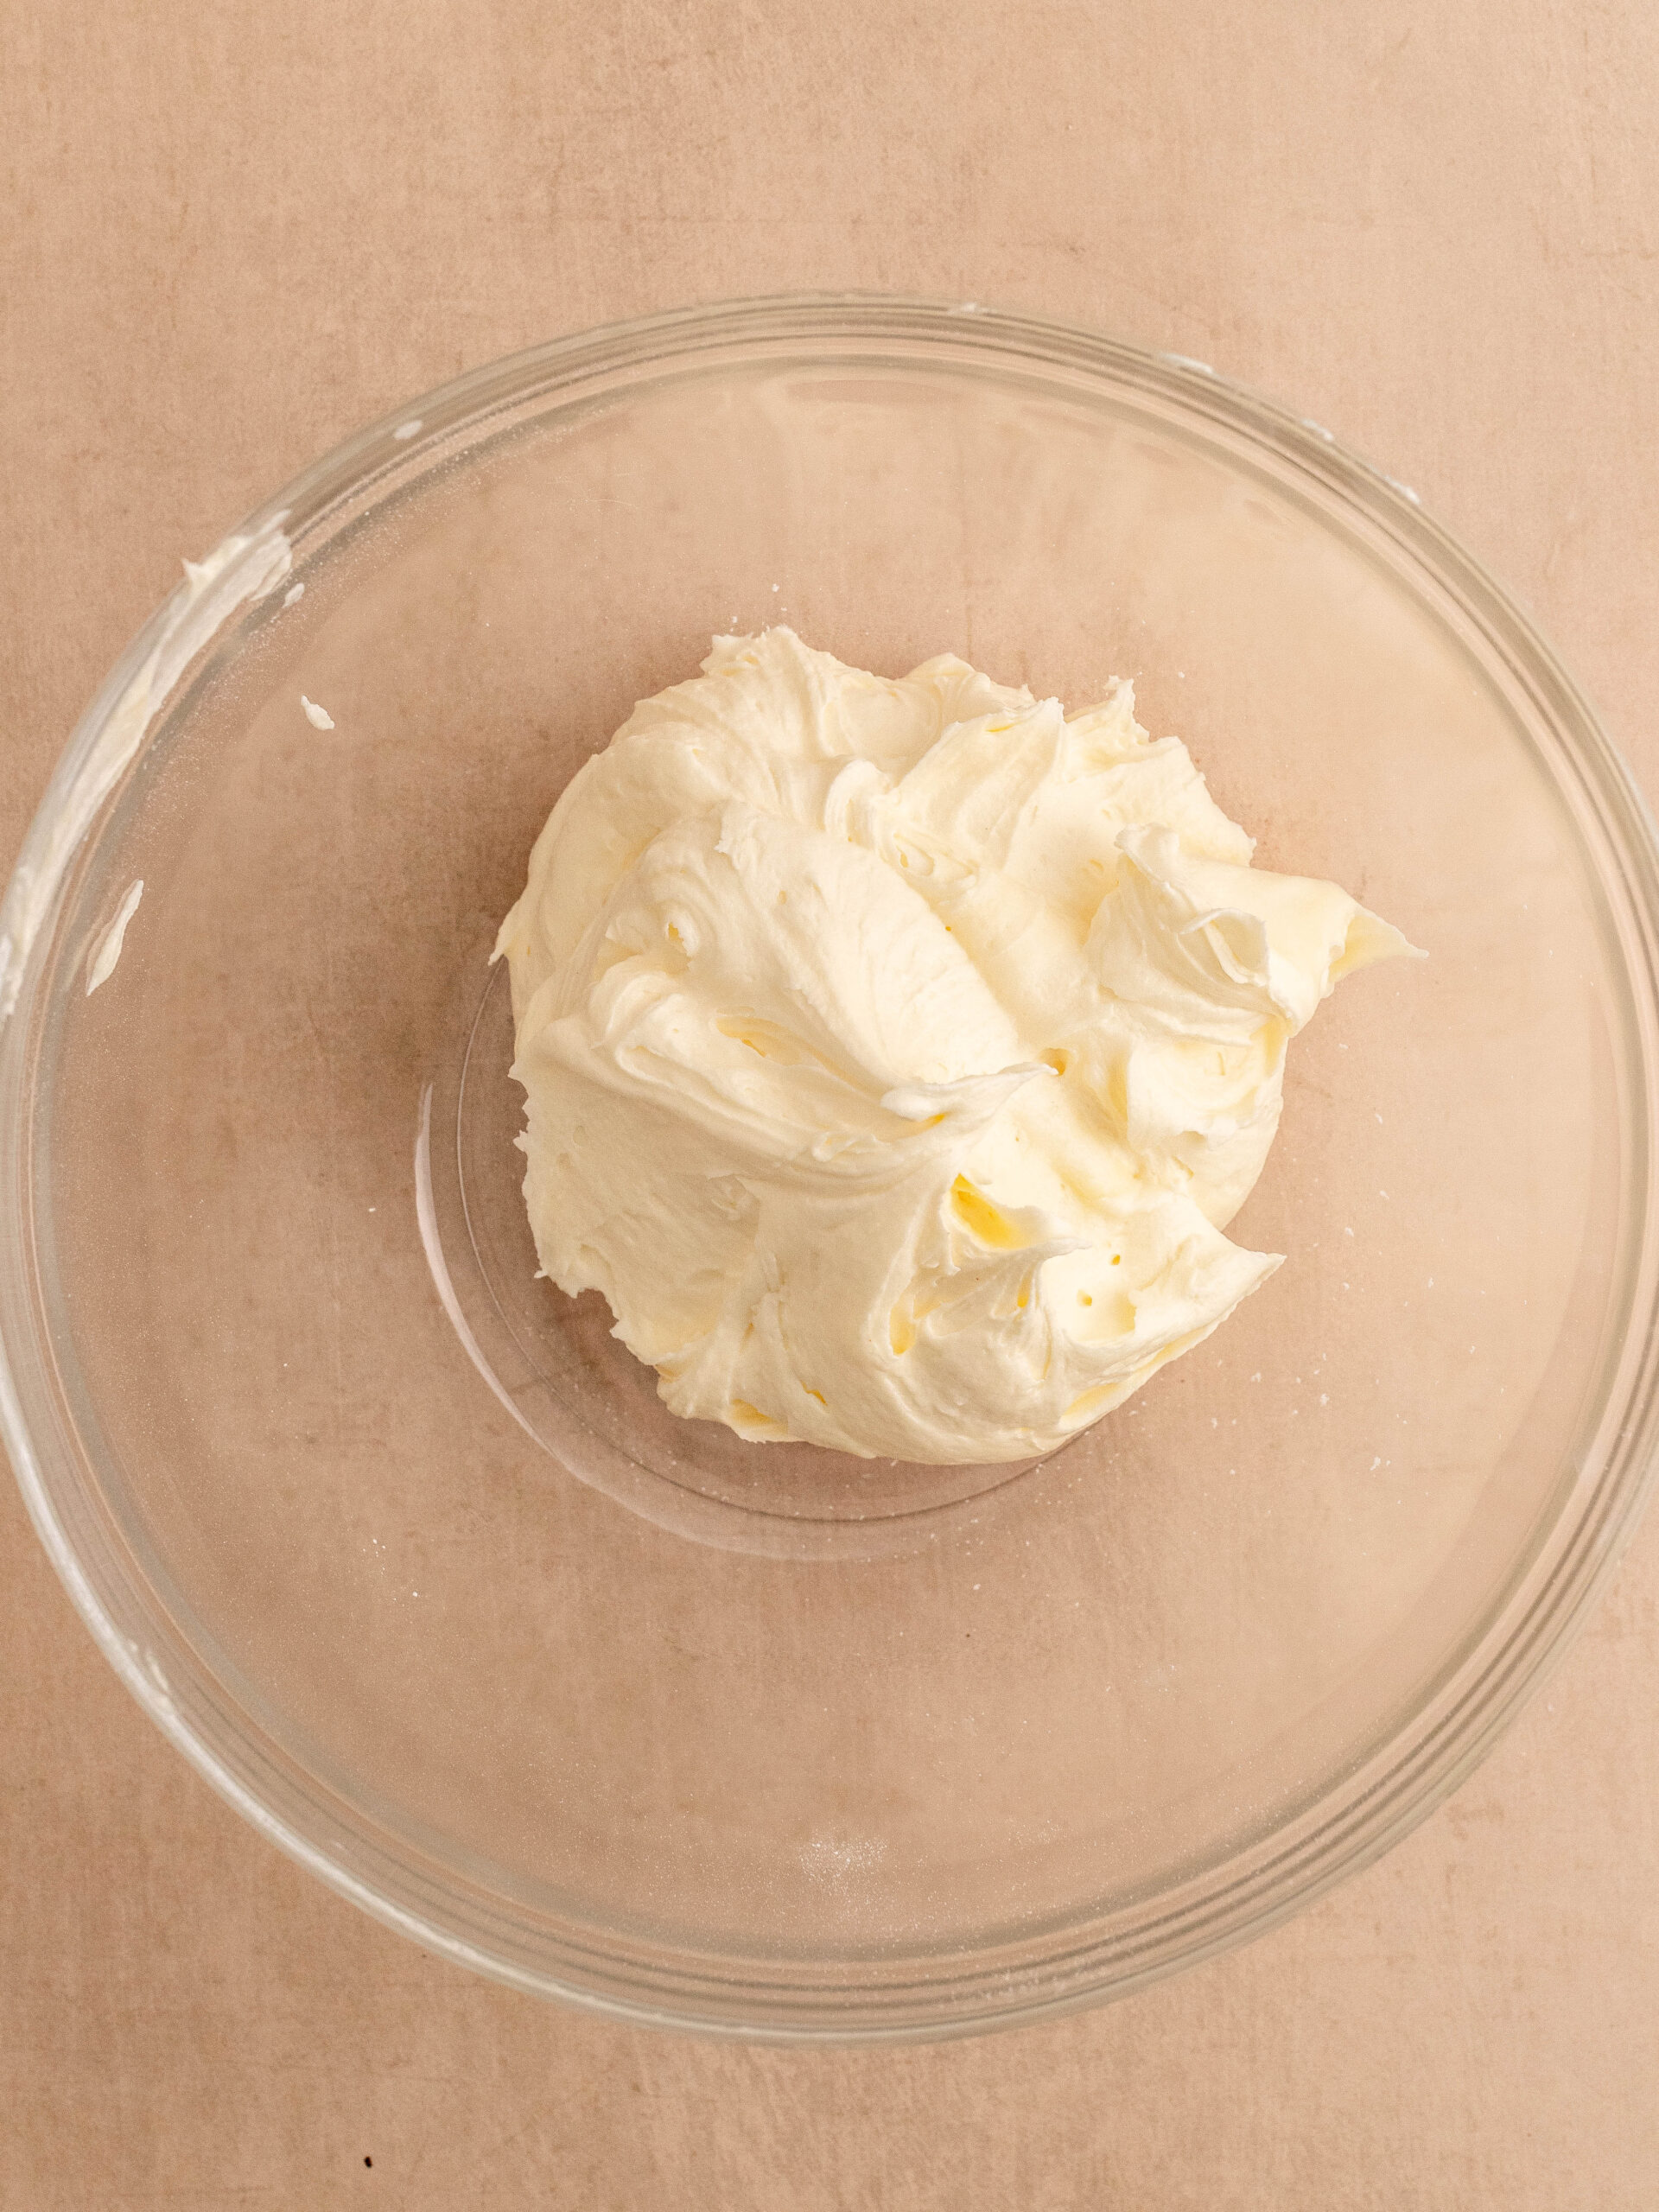 Step 2: The plain buttercream.